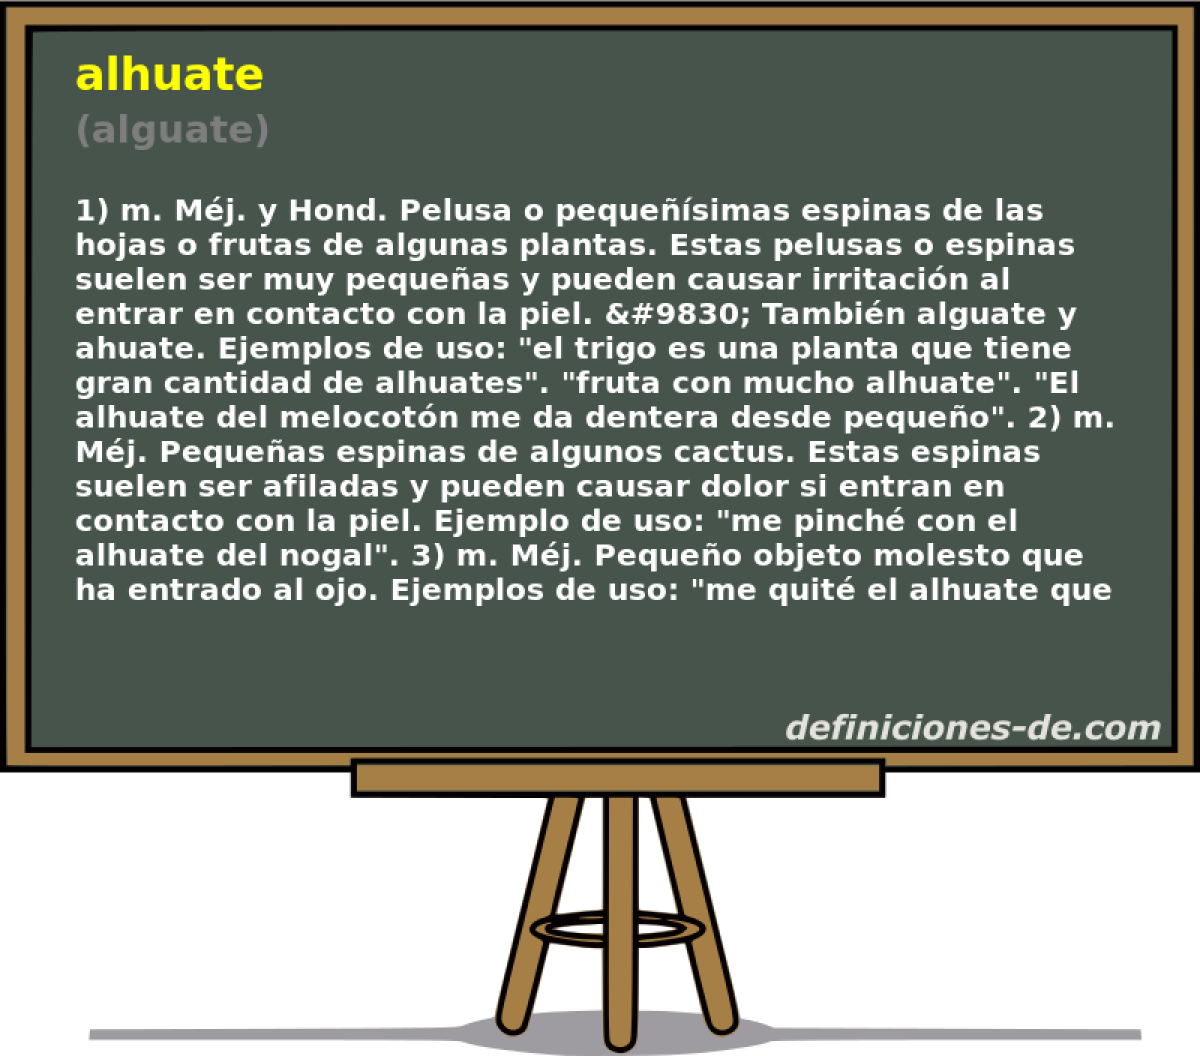 alhuate (alguate)